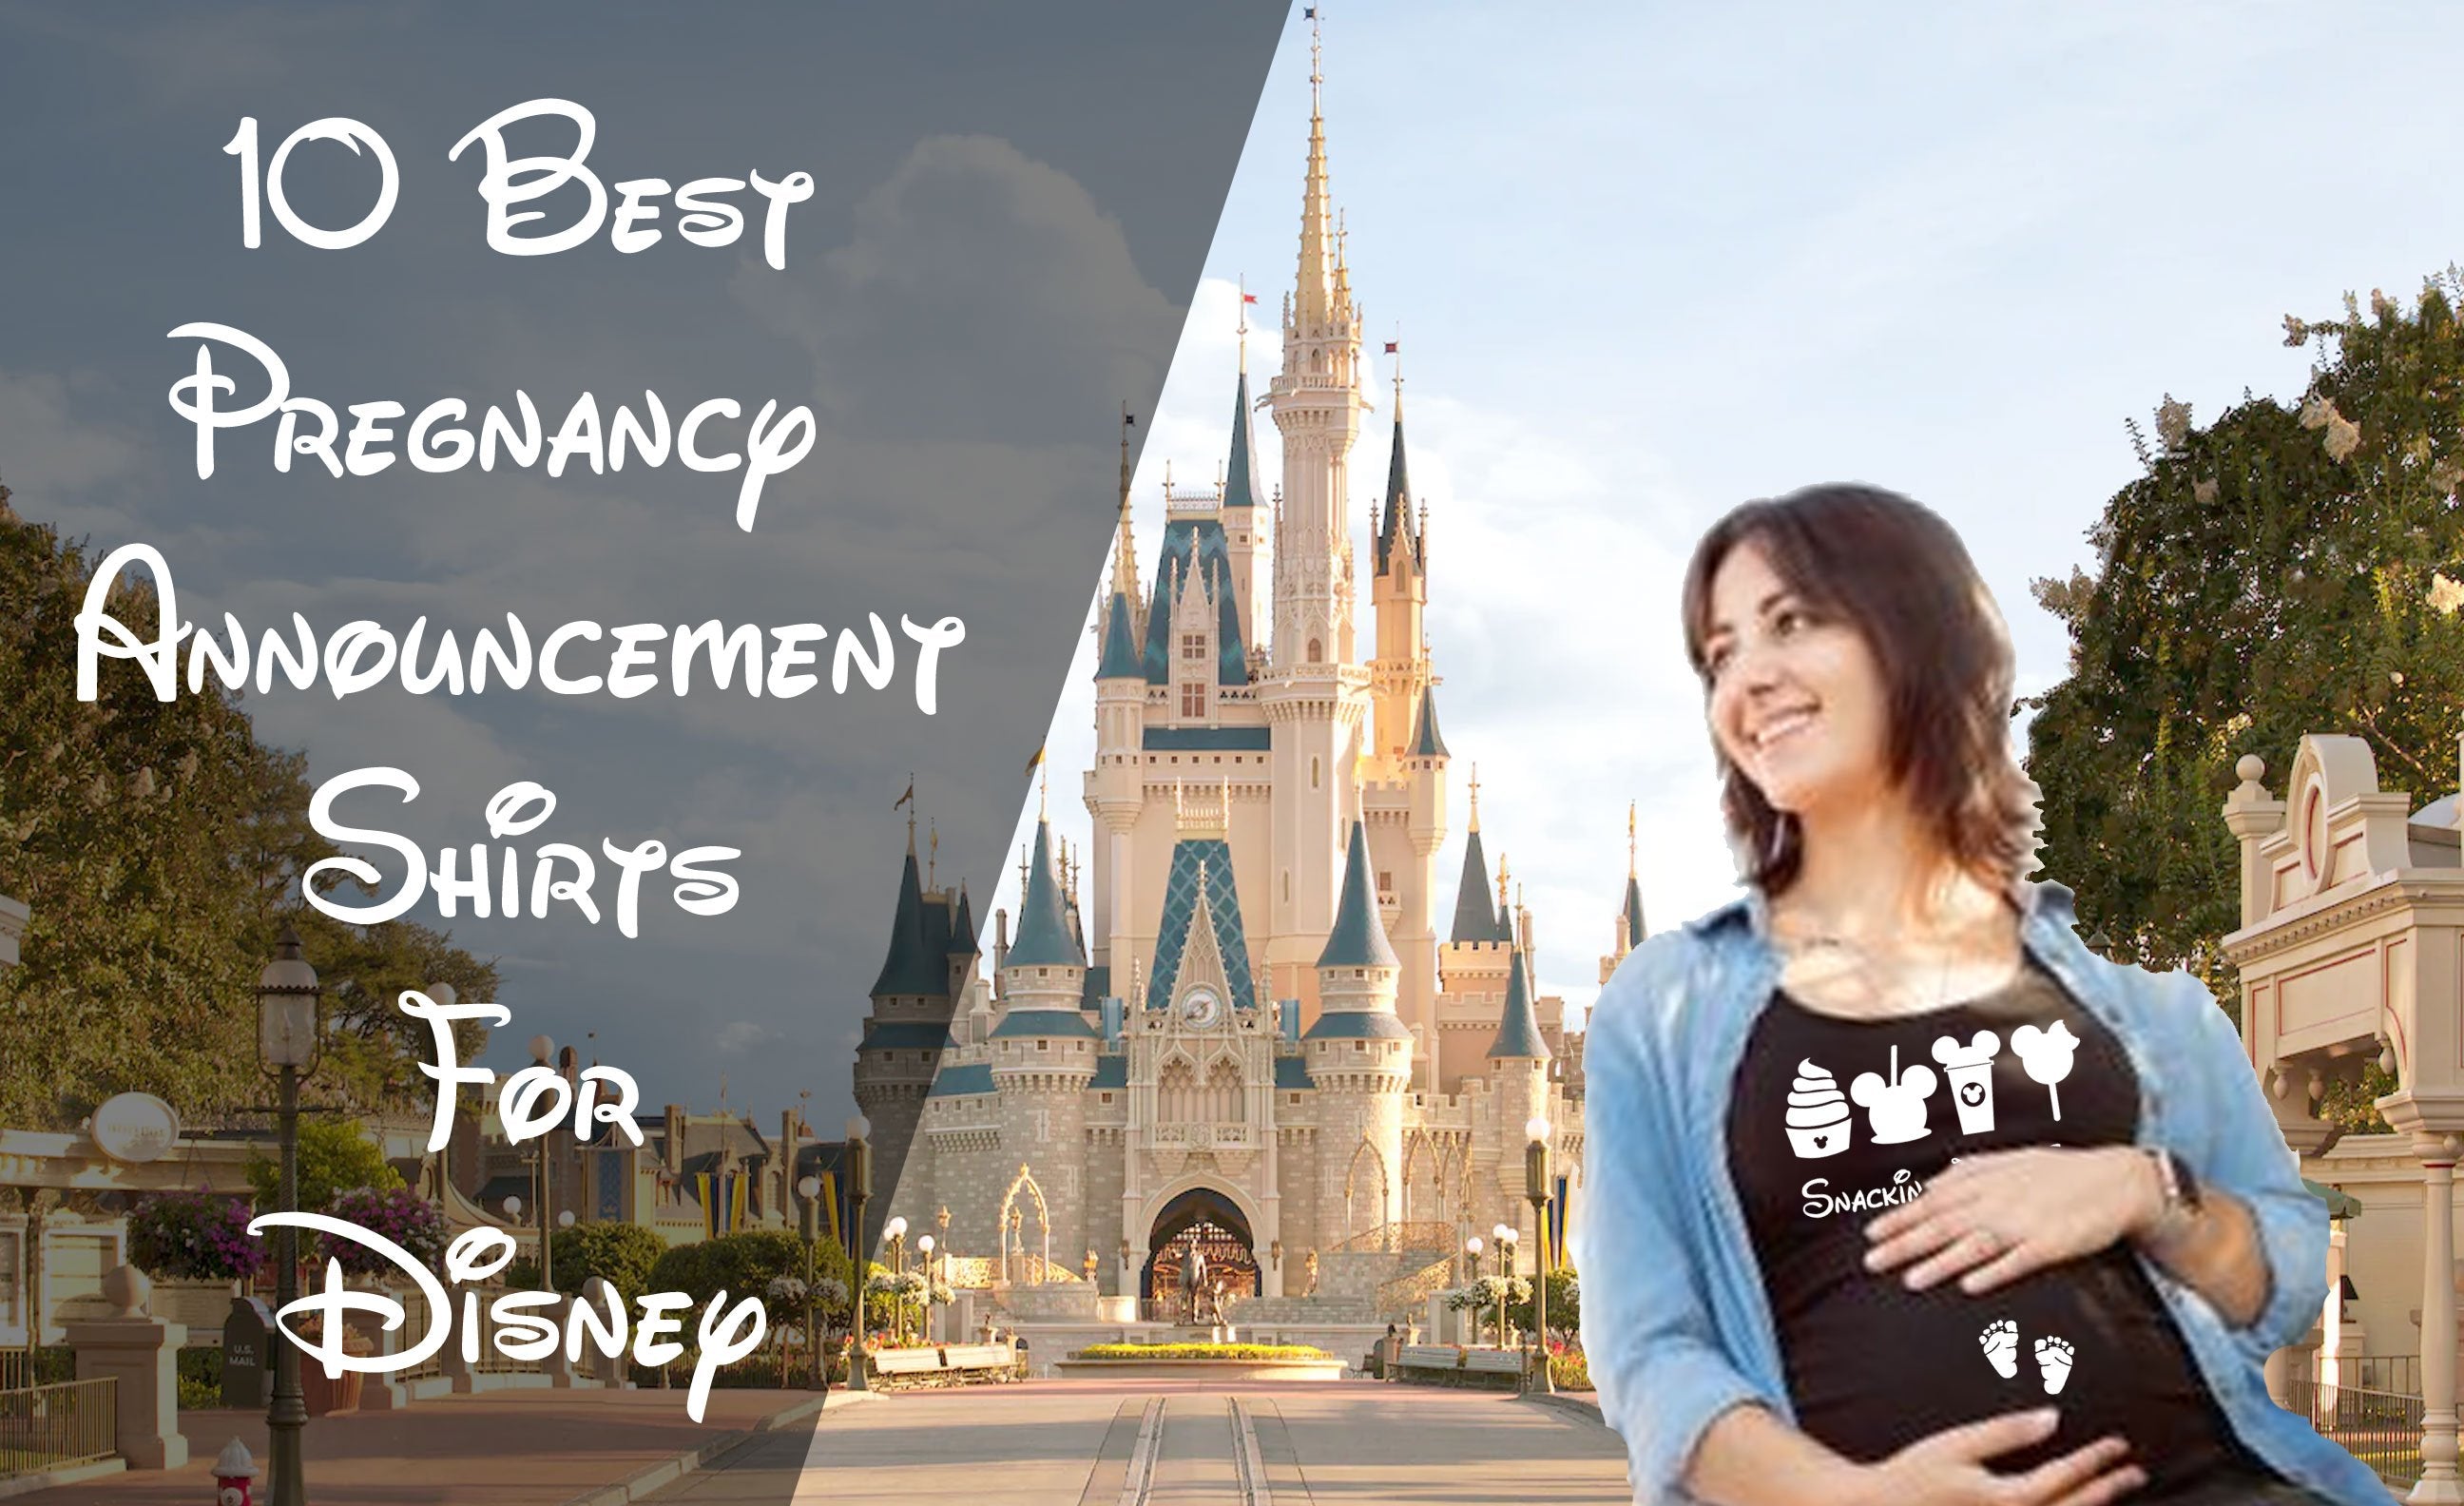 10 Best Disney Pregnancy Announcement Shirts - Elliefont Styles